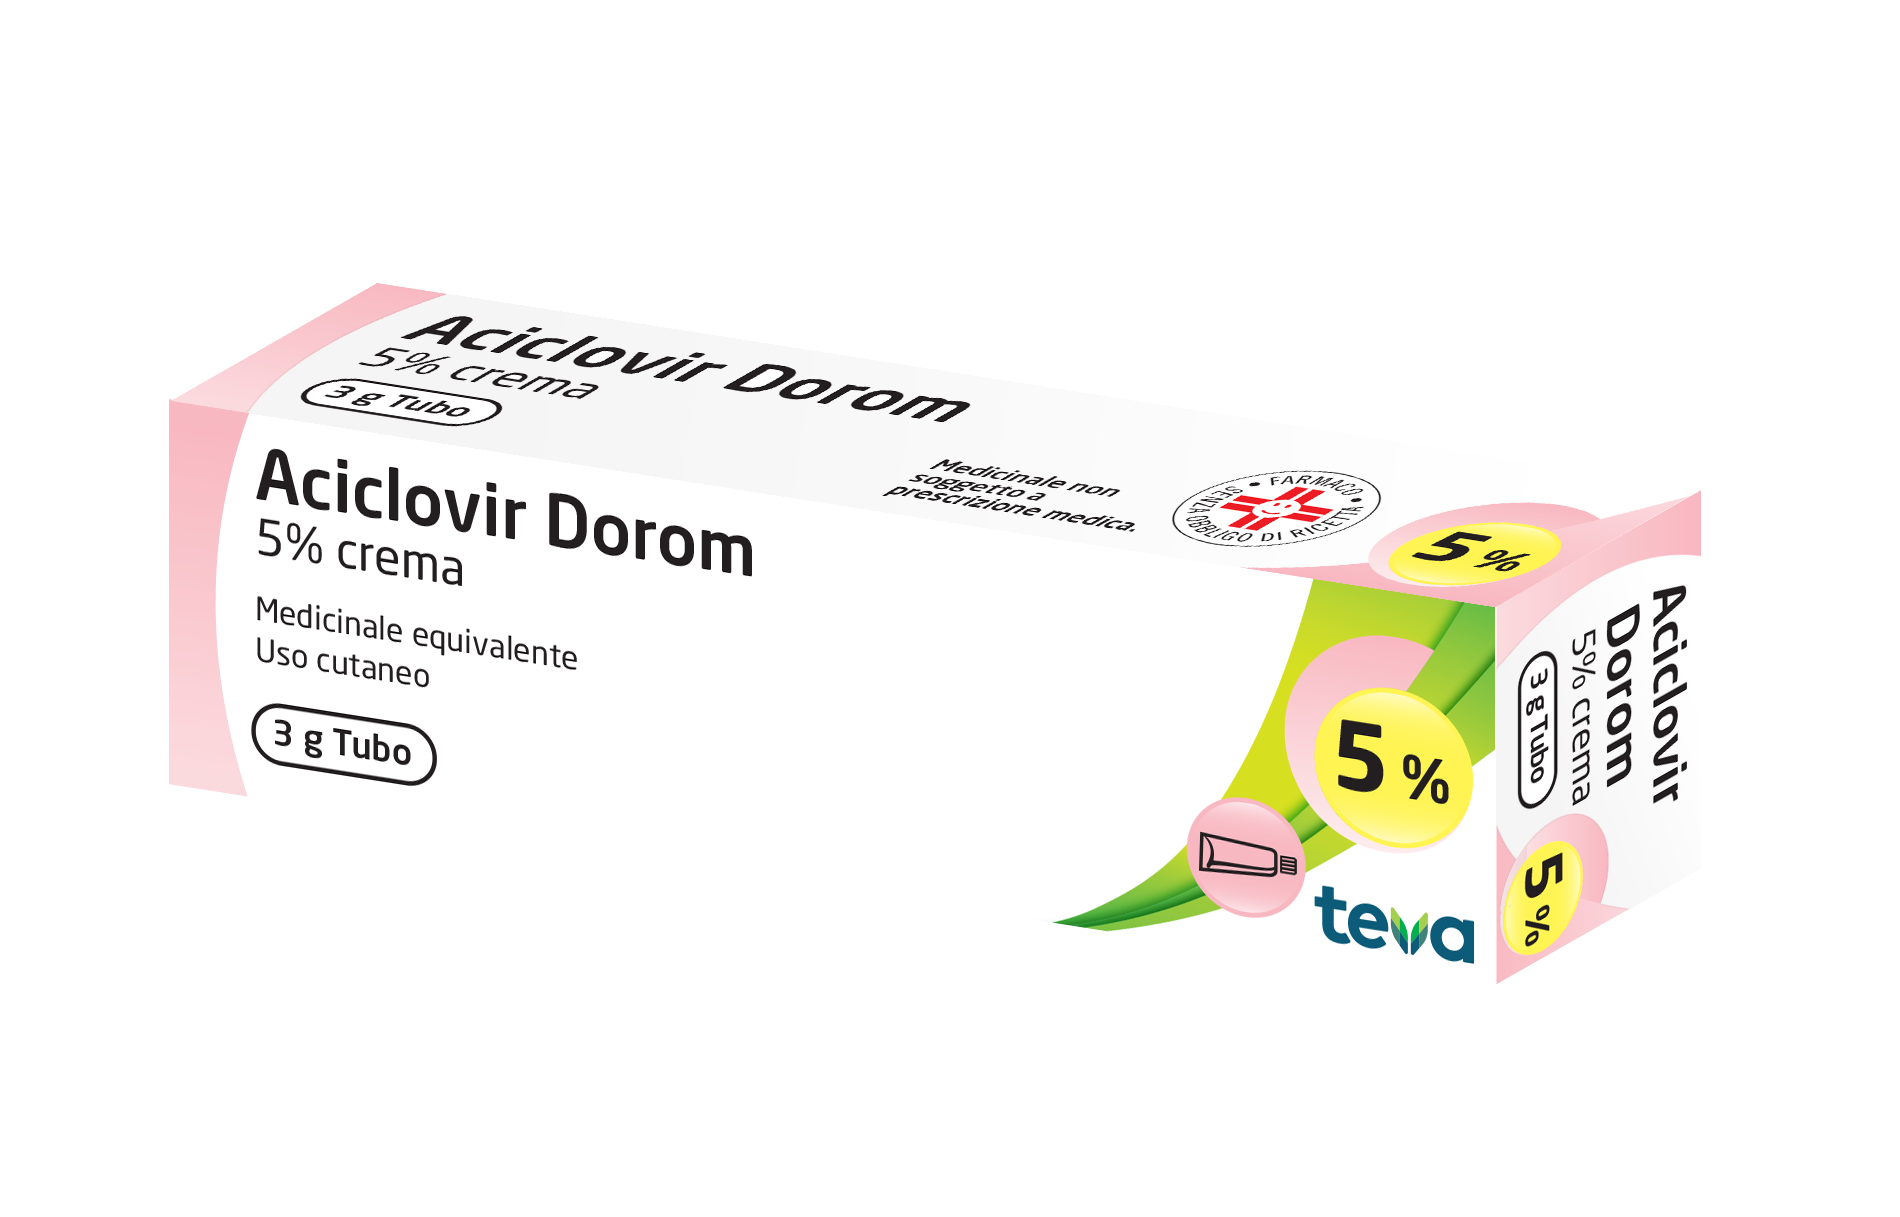 Aciclovir dorom 5% crema 5 crematubo 3 g